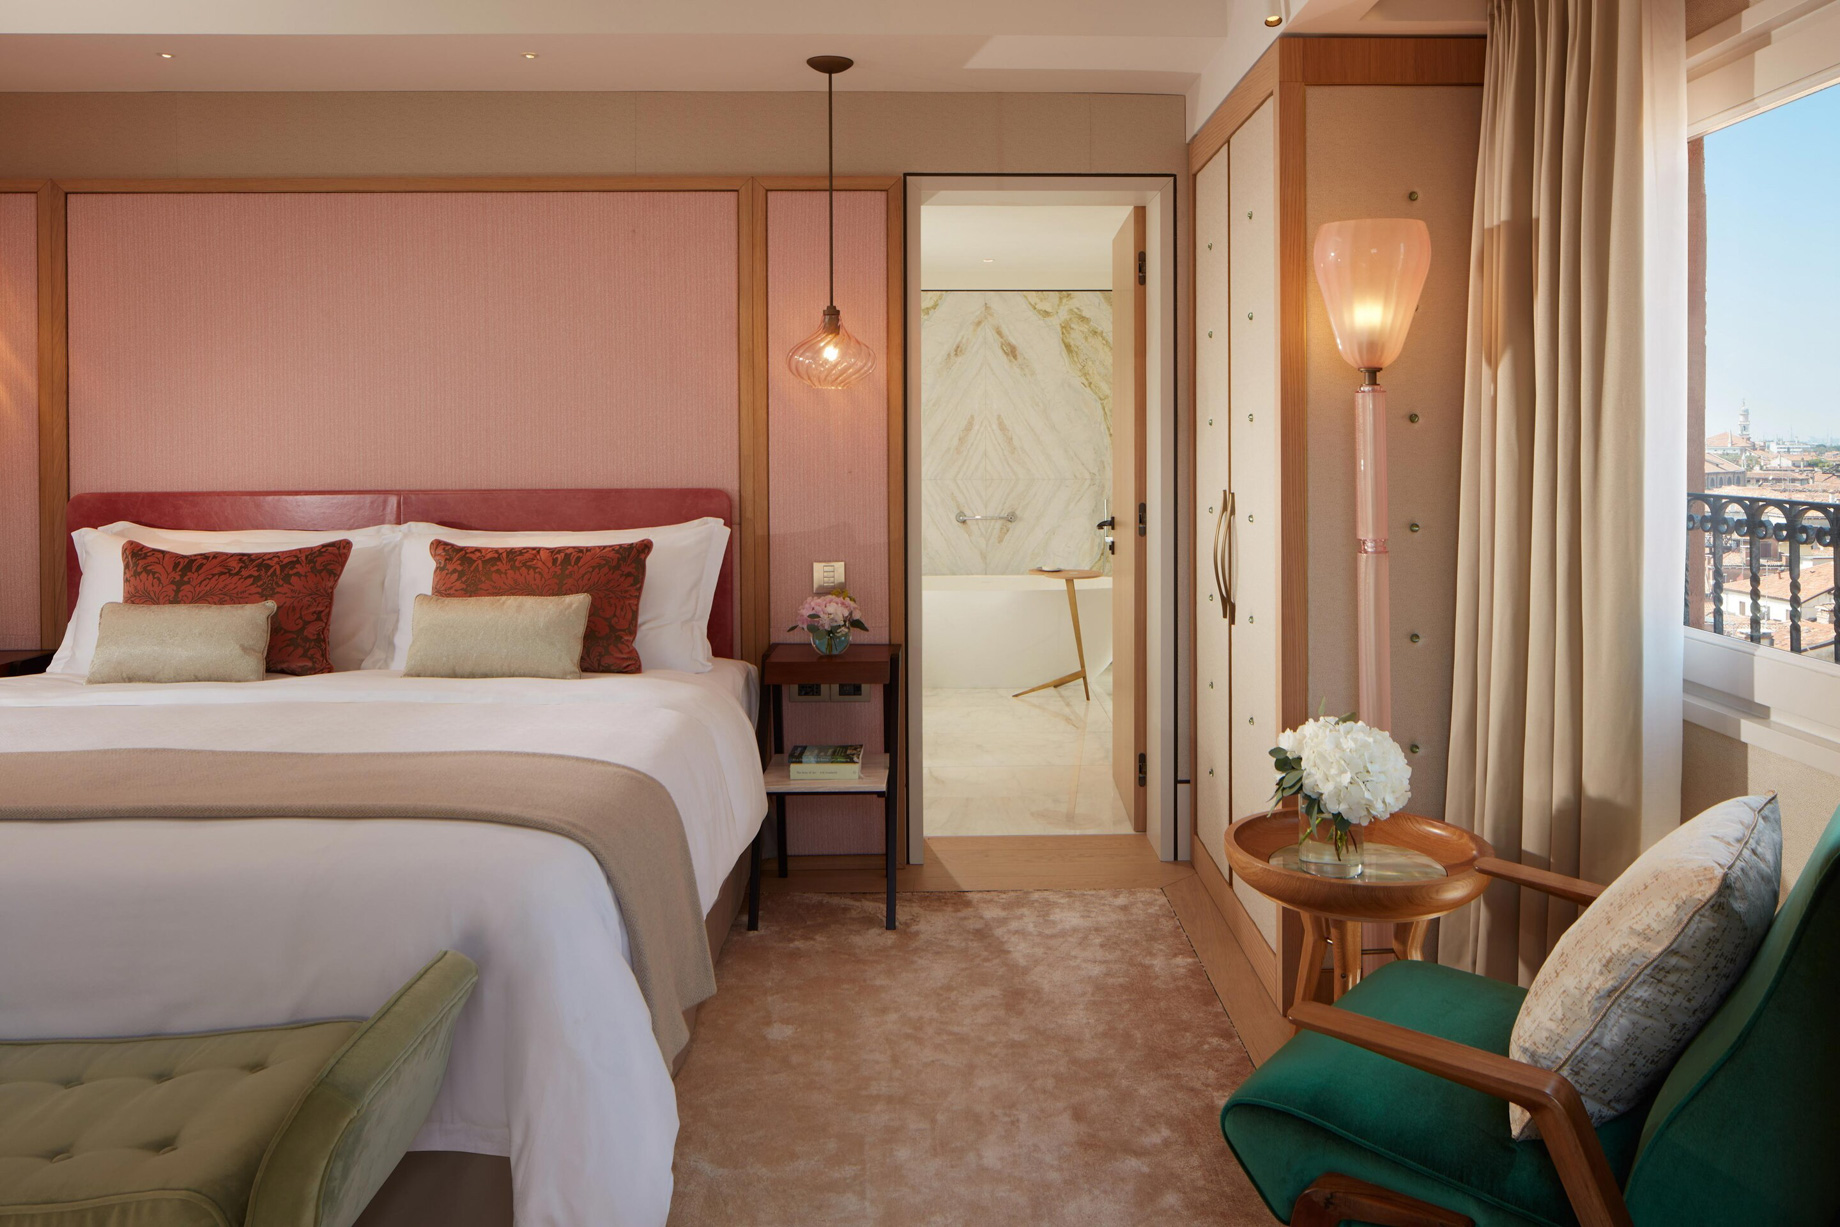 The St. Regis Venice Hotel – Venice, Italy – Penthouse Suite Bedroom Interior